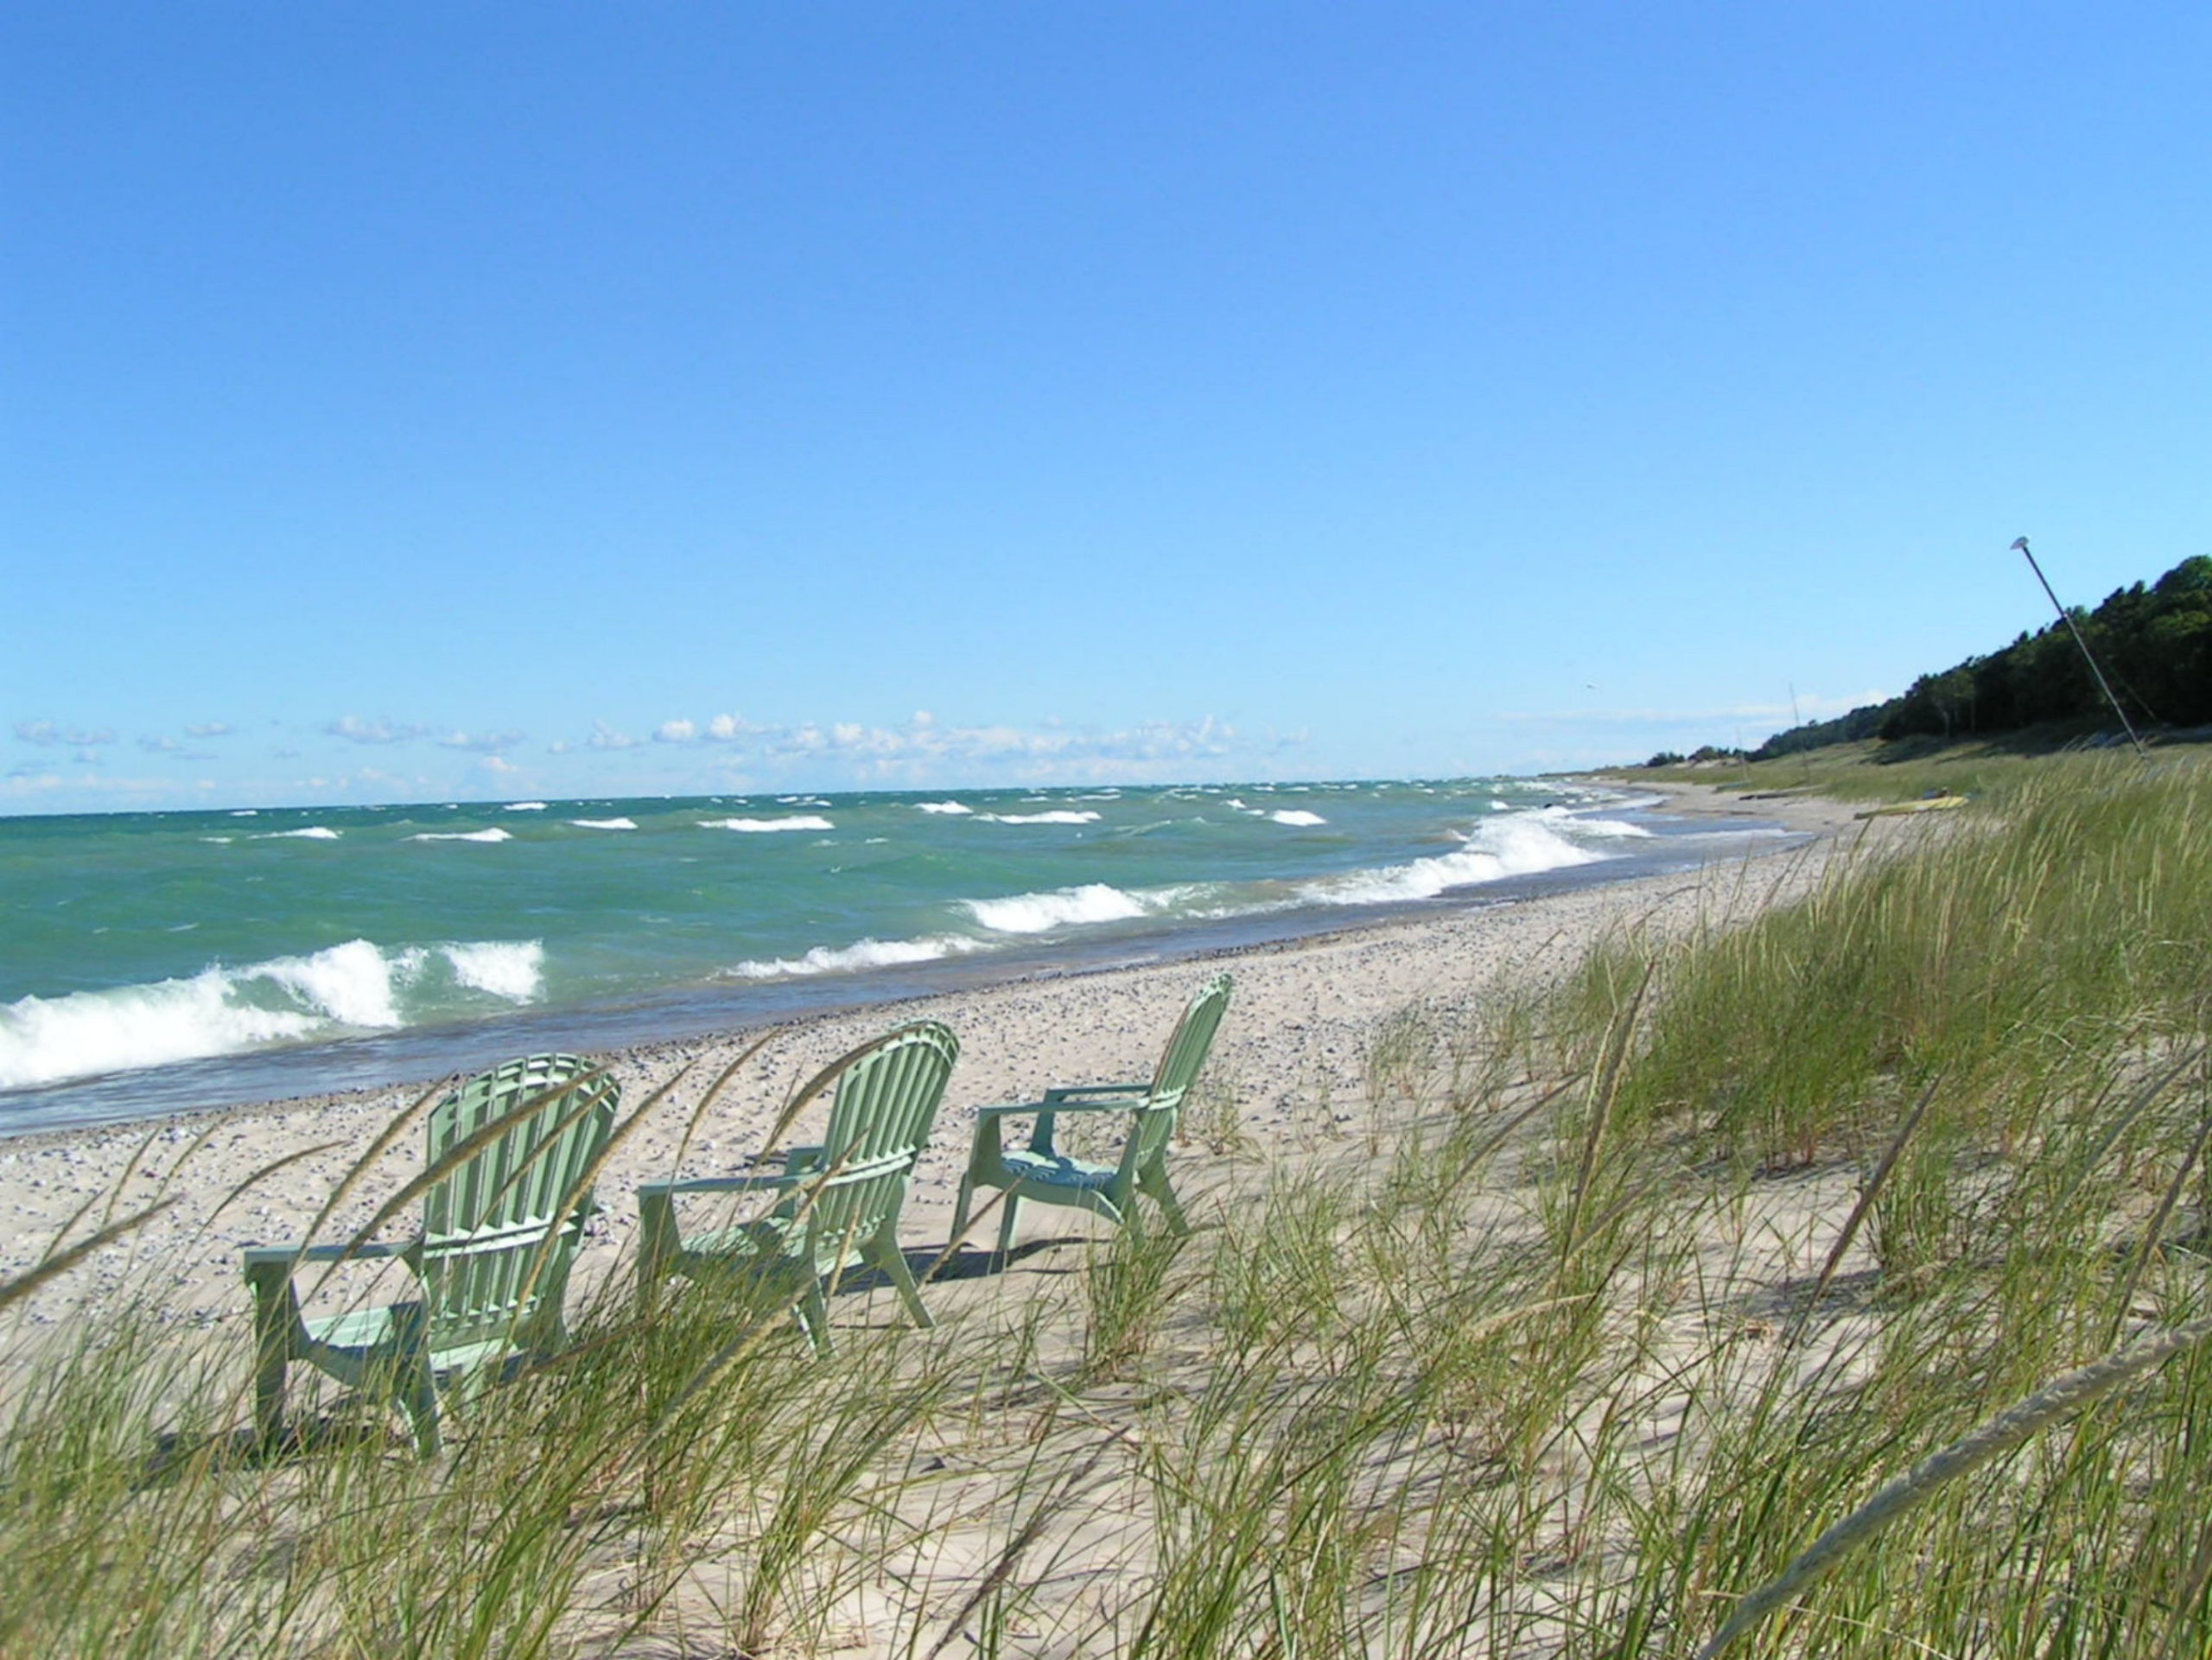 Adirondack chairs on beach with dune grass